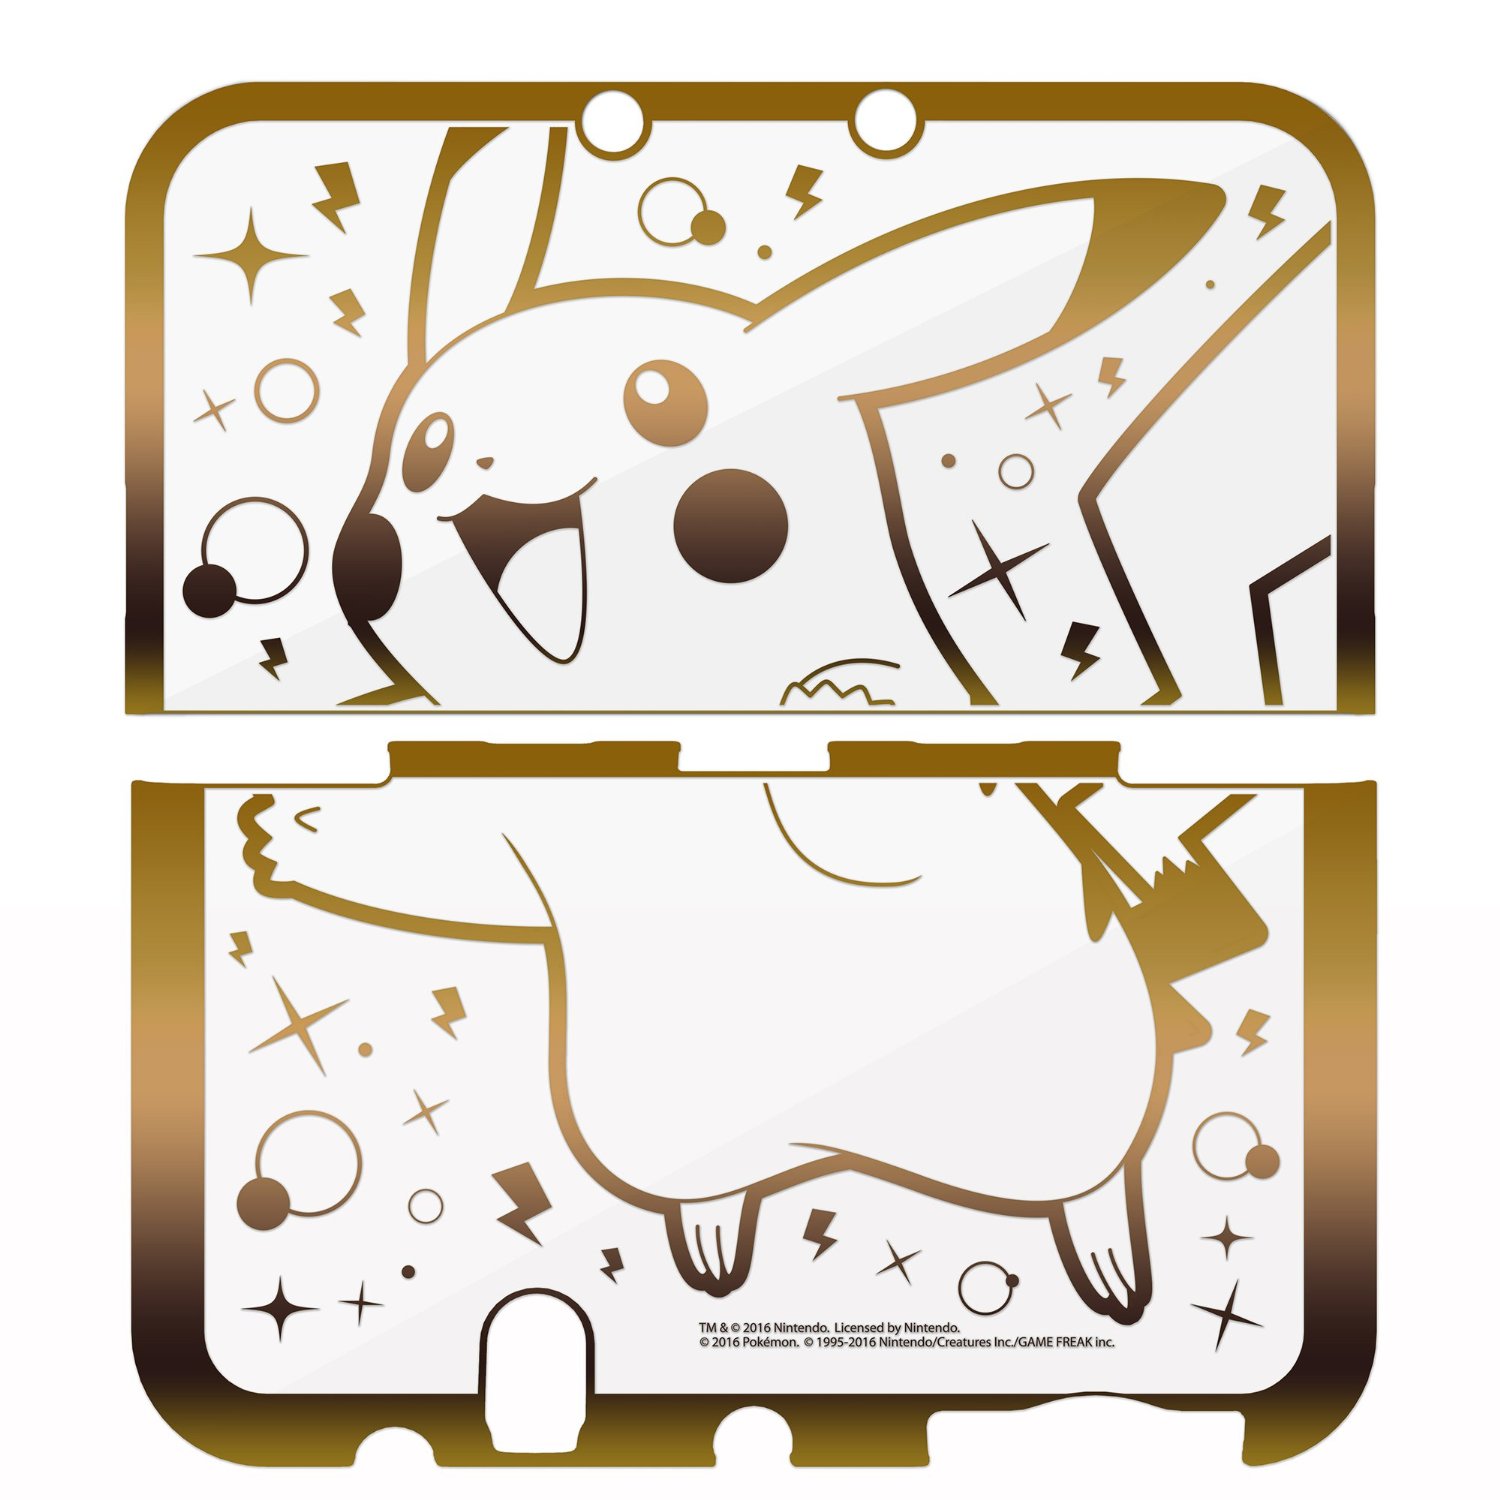 new nintendo 3ds pikachu